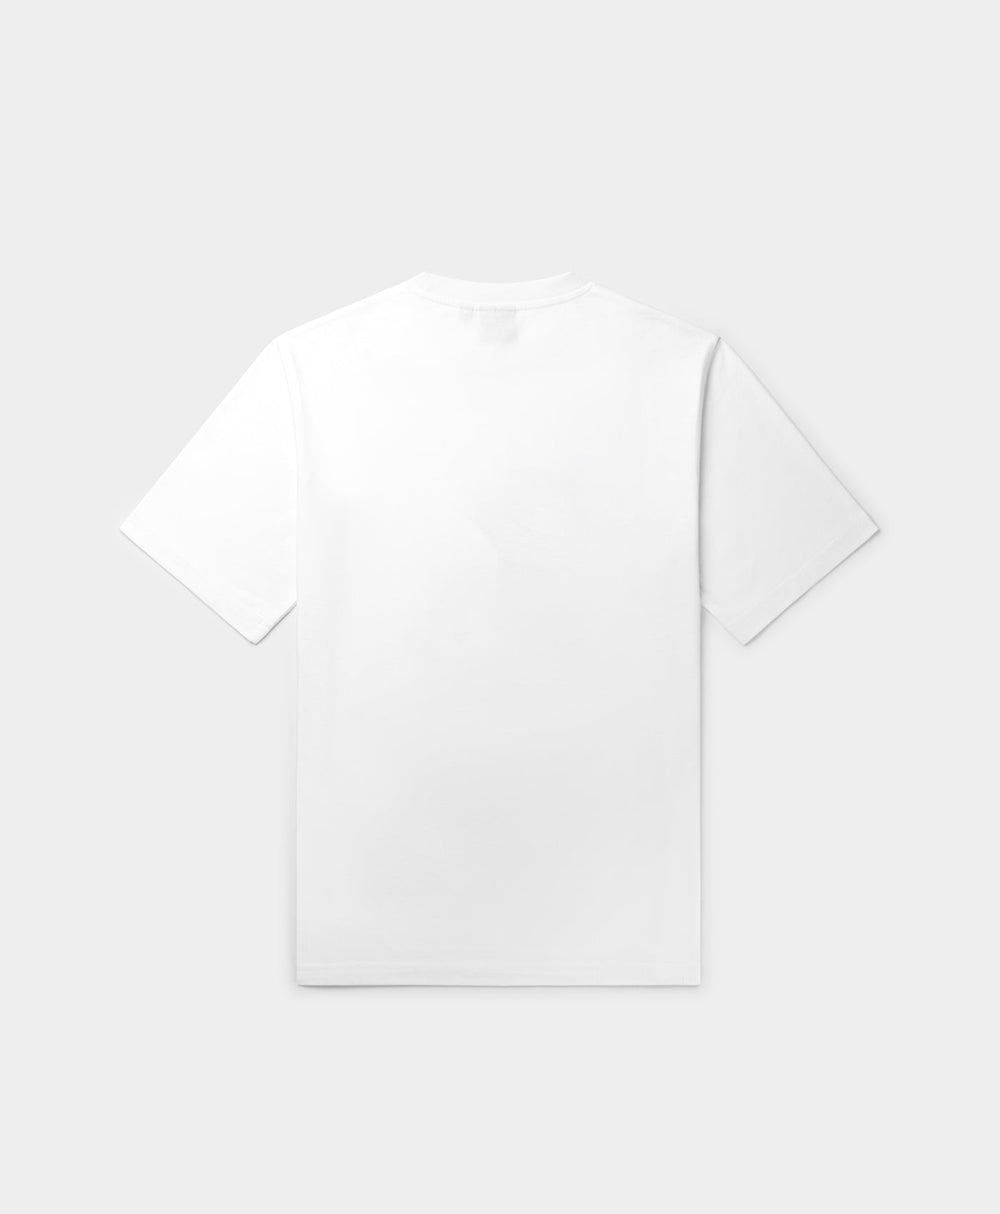 DP - White Landscape T-Shirt - Packshot - Rear